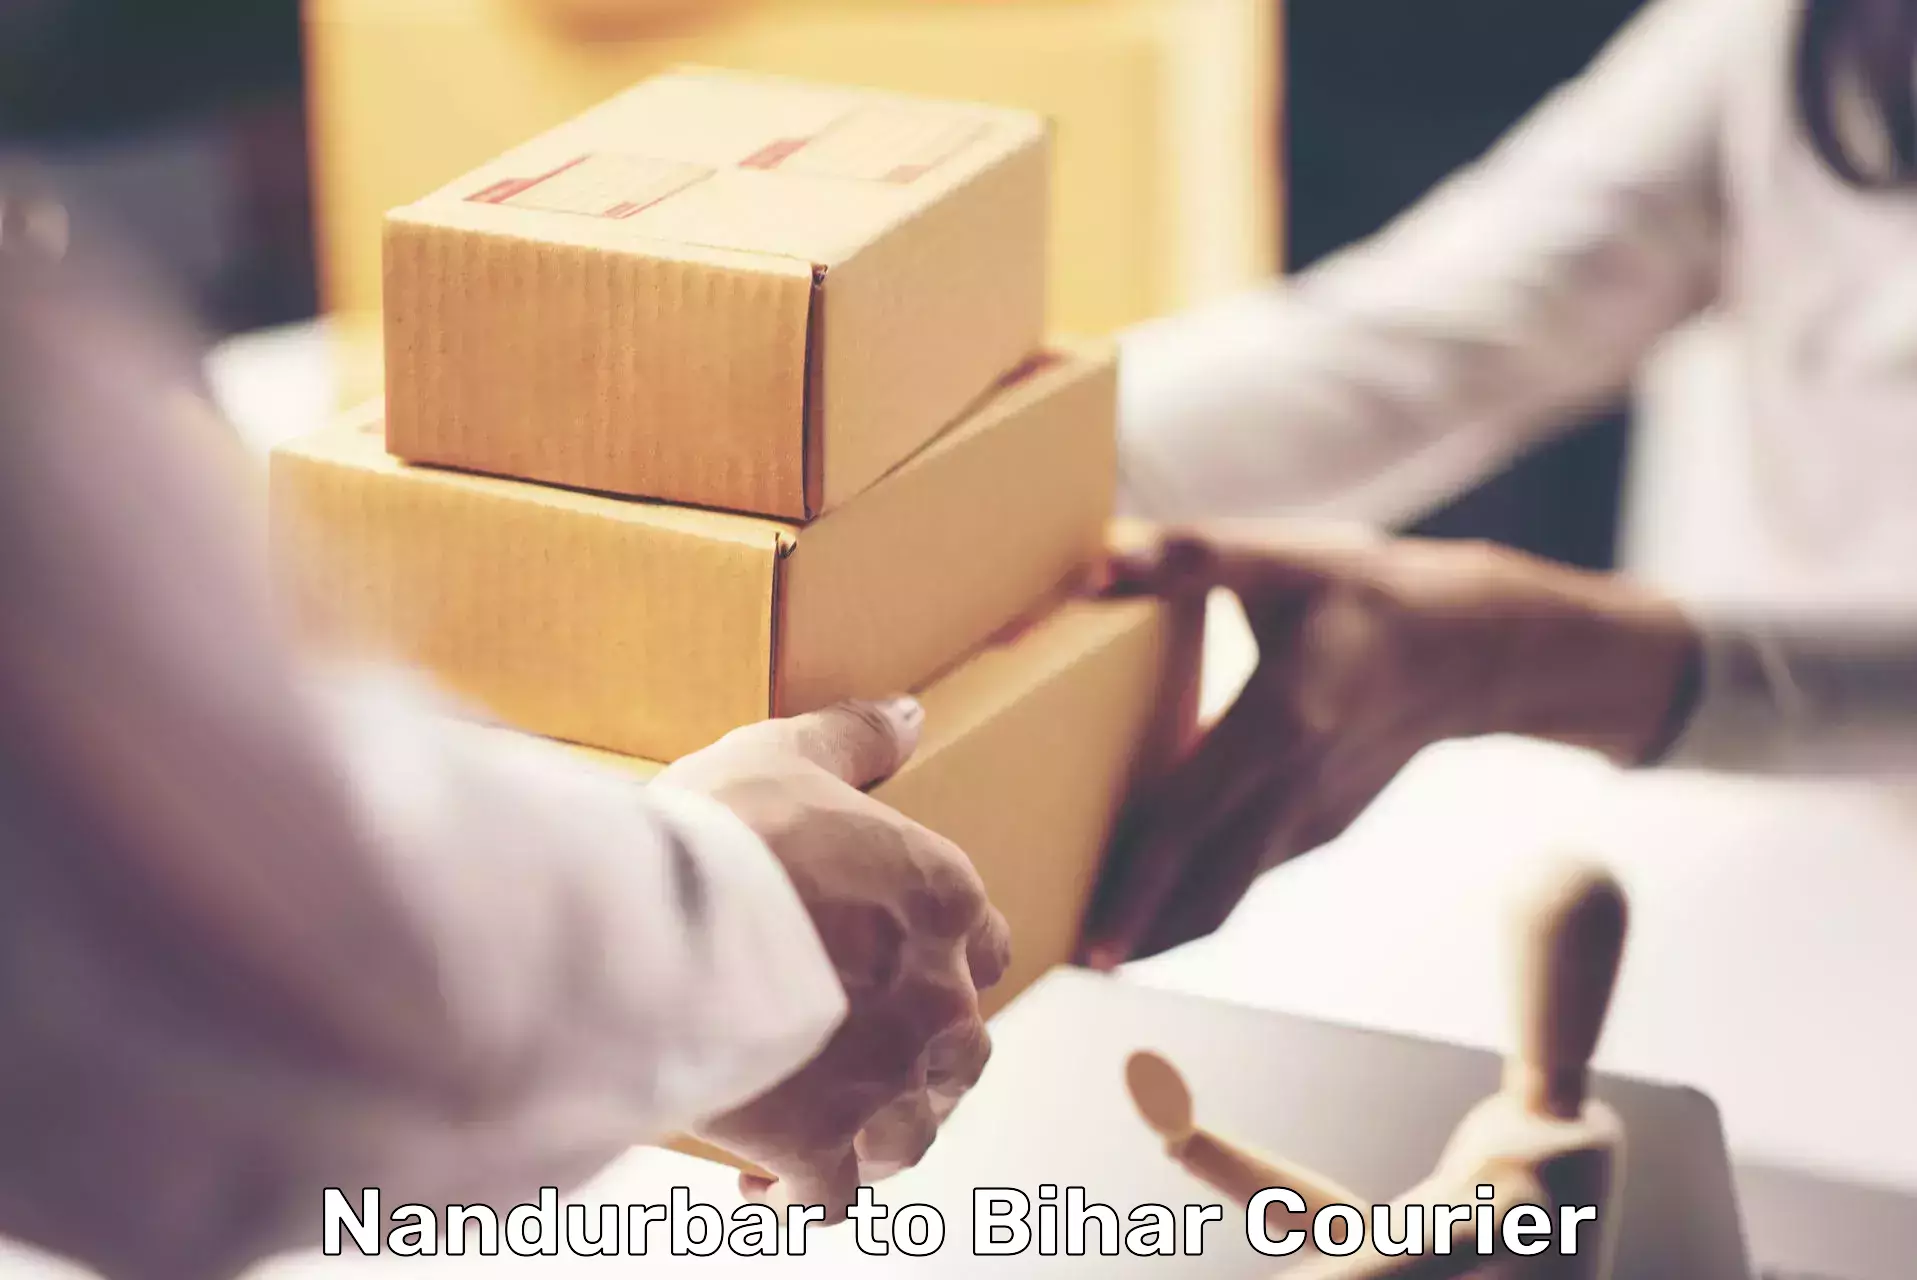 Advanced delivery network Nandurbar to Chakai